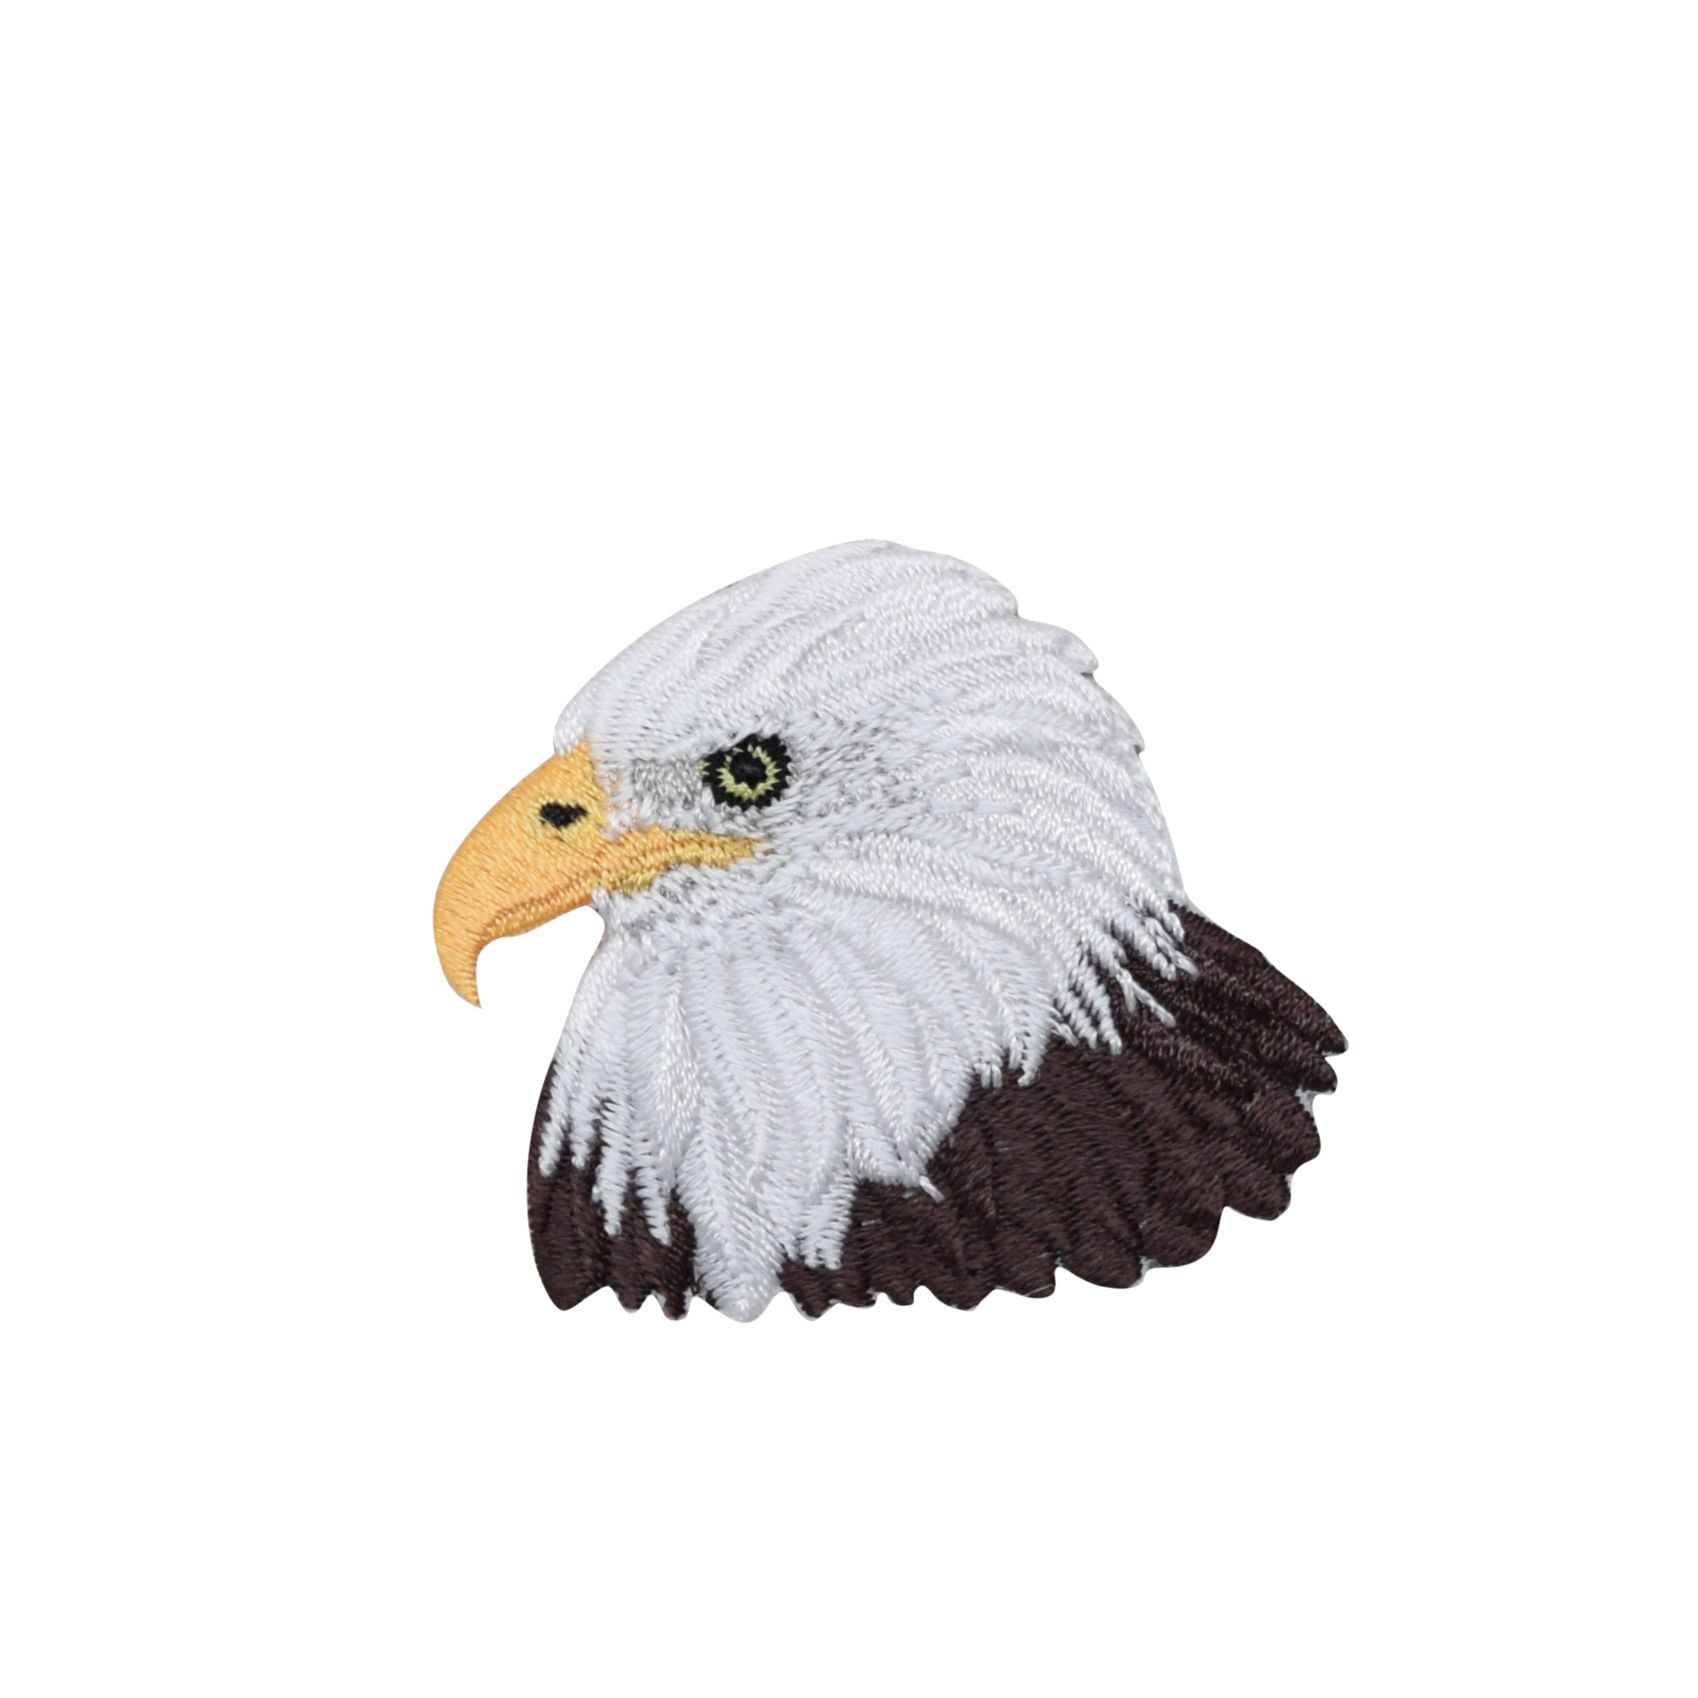 LARGE EAGLE BIRD DESIGN BIKER PATCH BADGE SEW OR IRON GOOD DETAIL AMAZING 